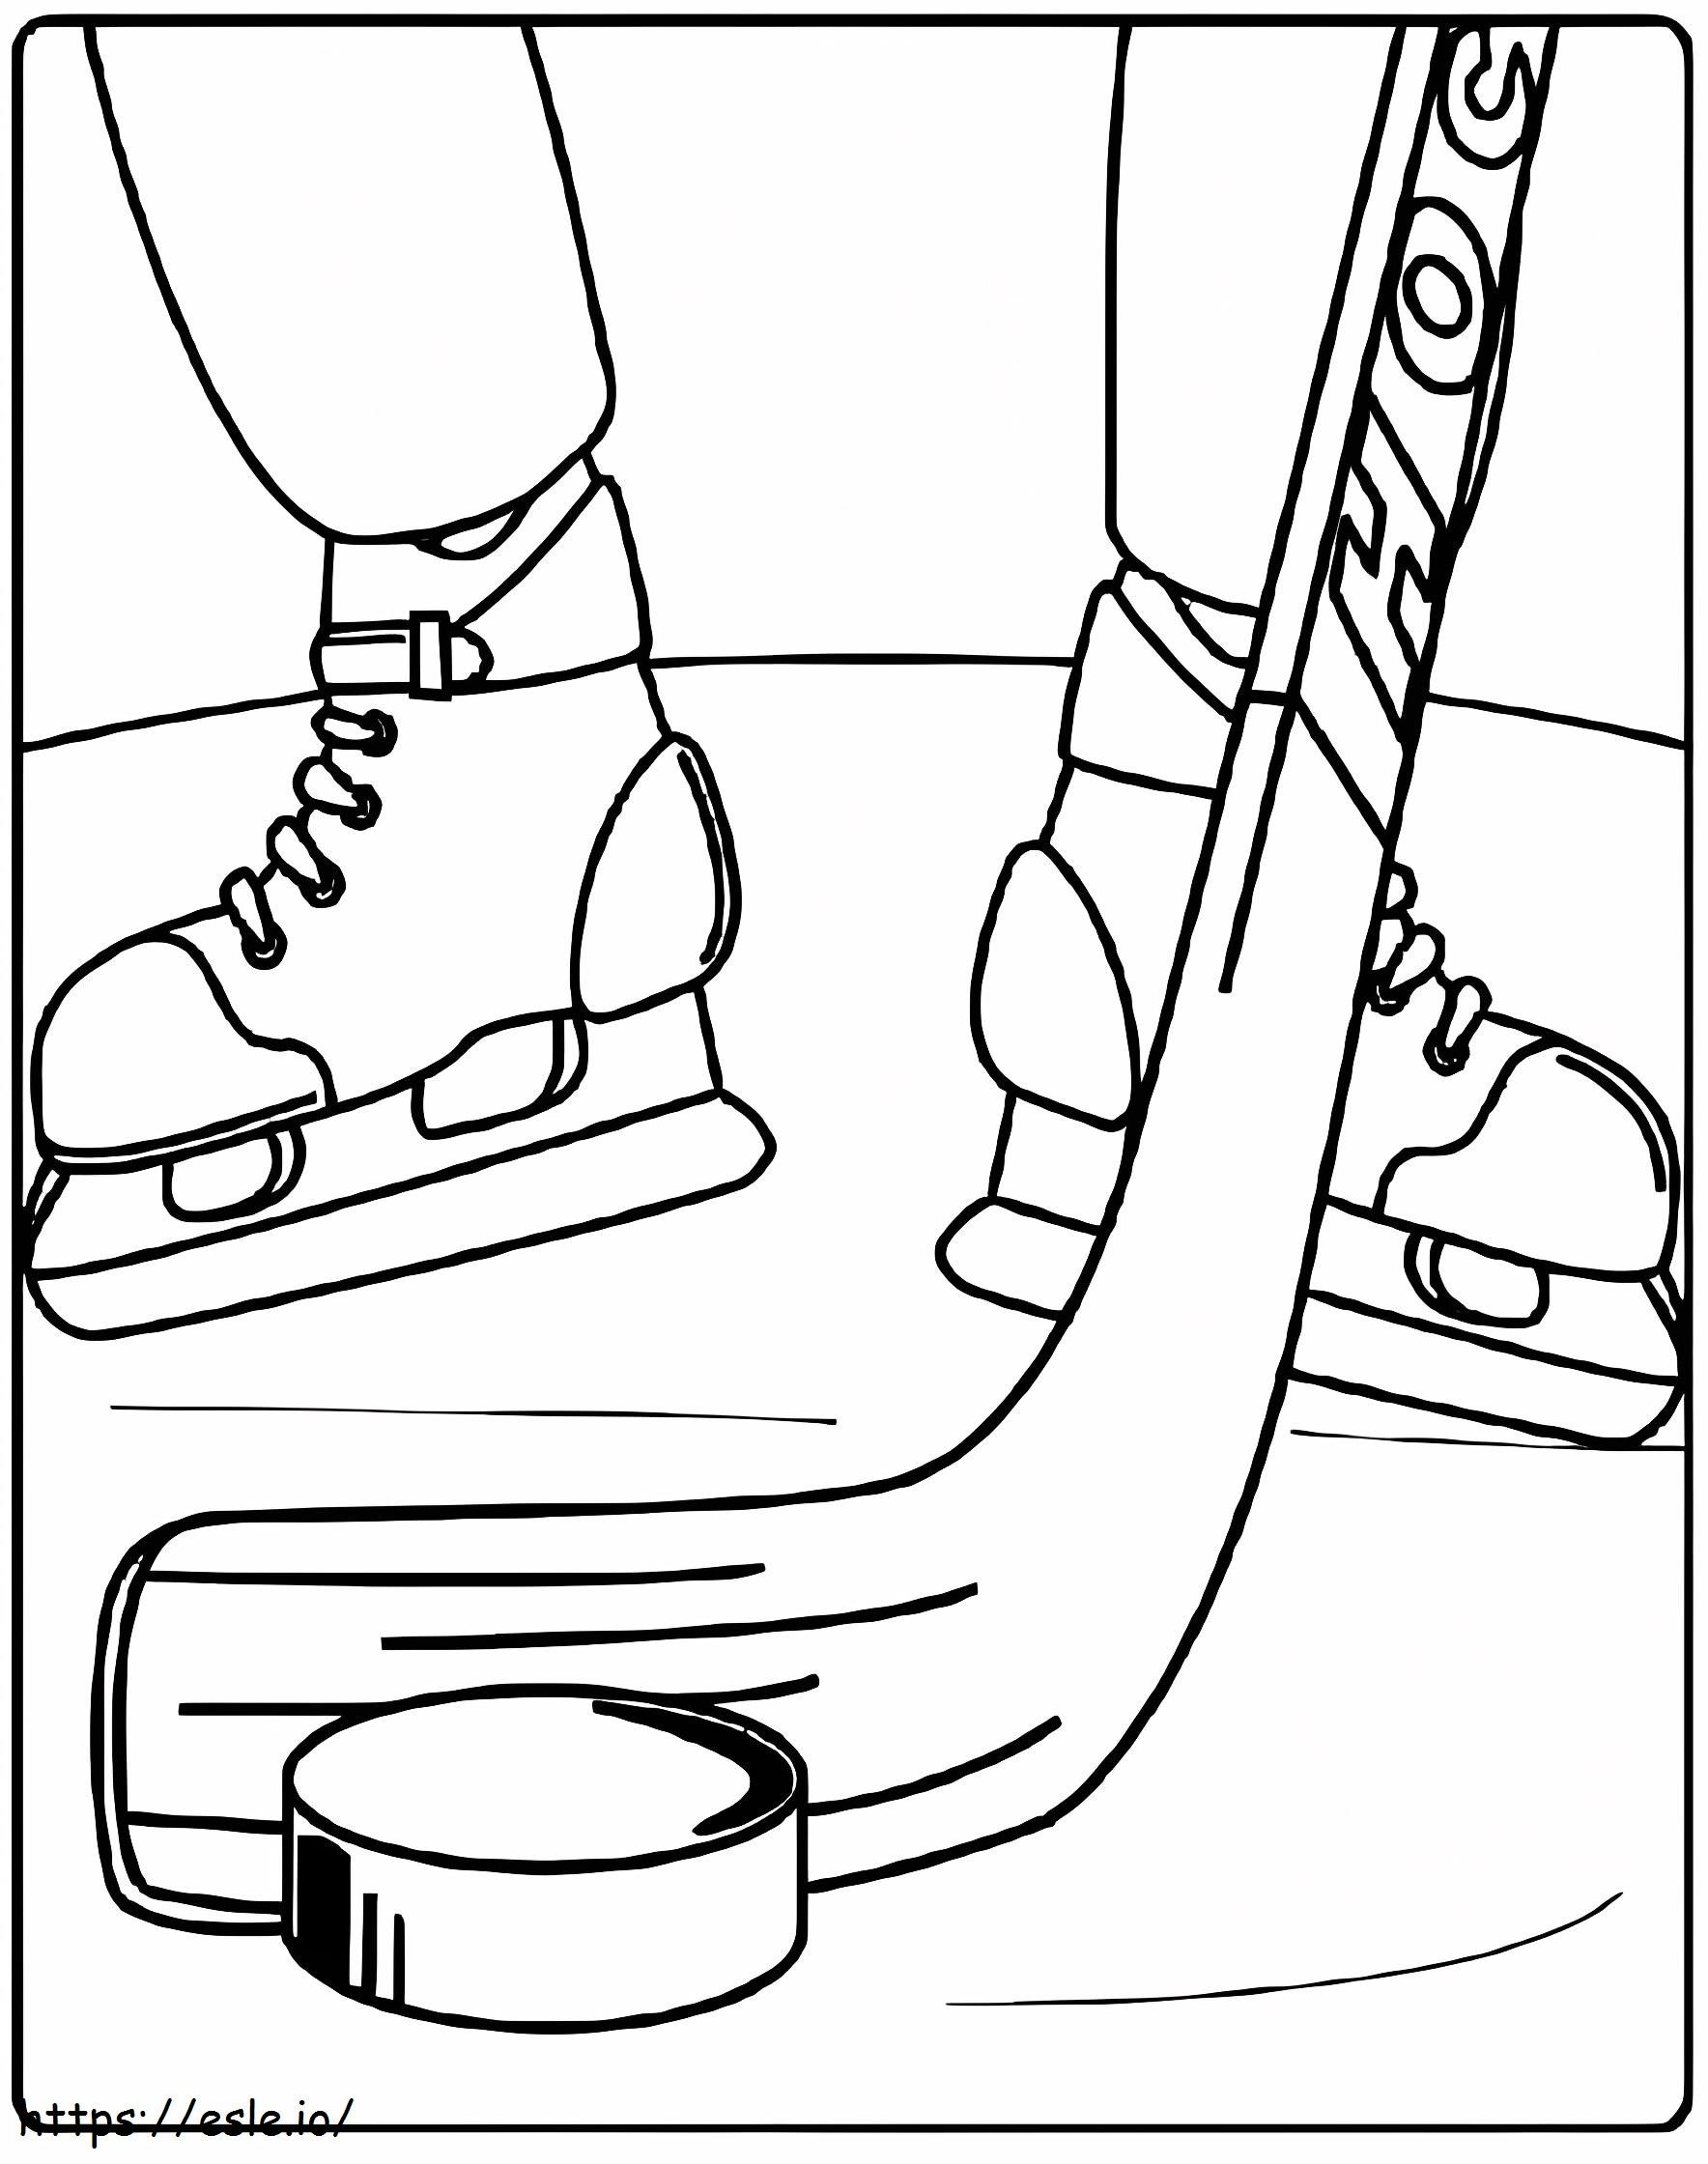 Basic Hockey coloring page